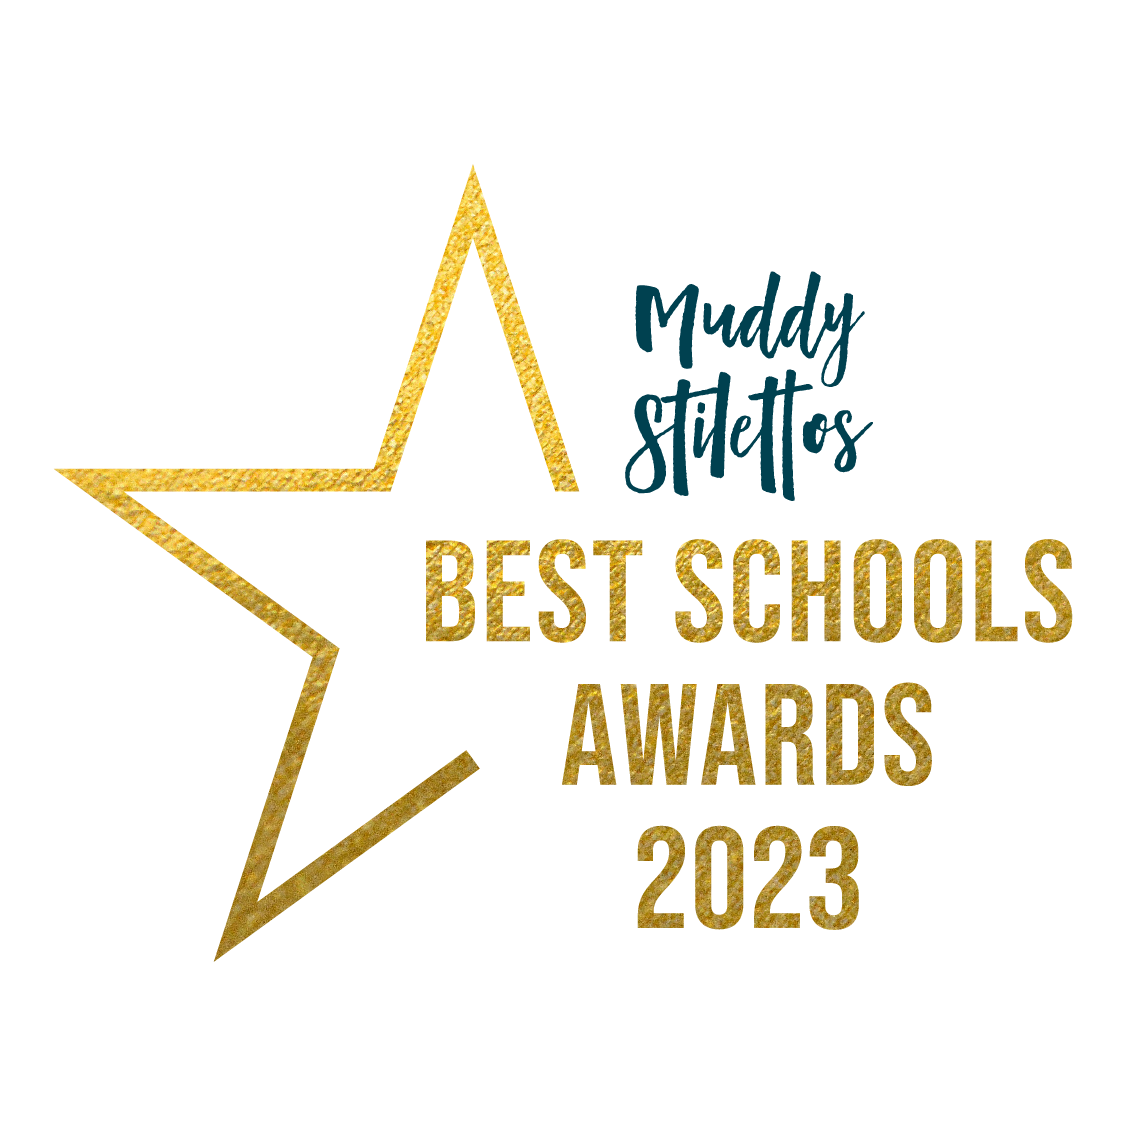 Muddy Schools Awards 2022